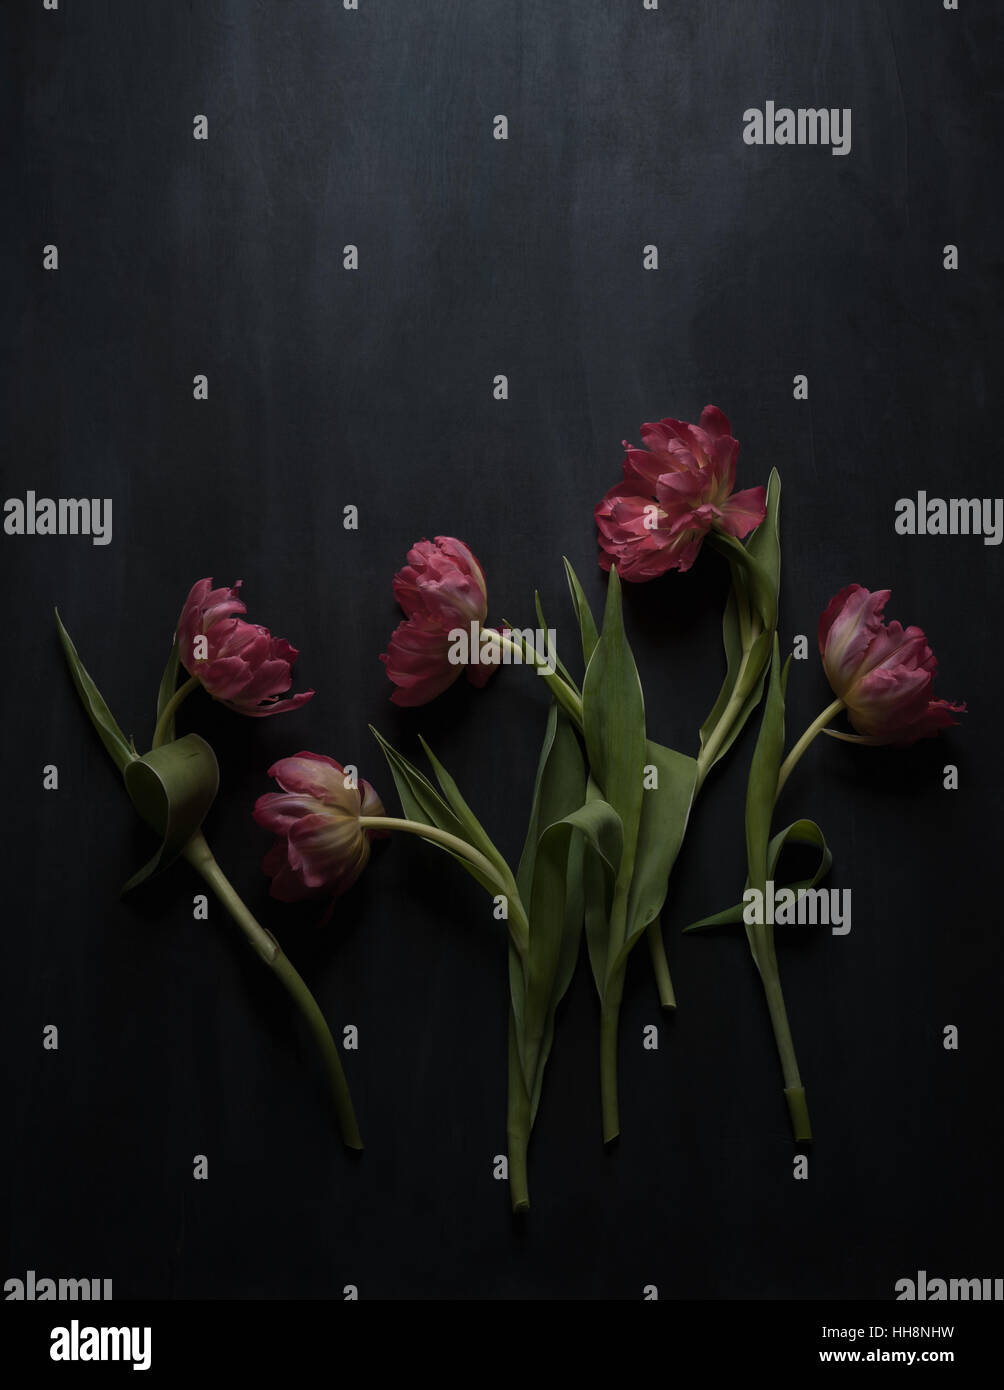 Cinco tulipanes doble rosa sobre fondo oscuro Foto de stock